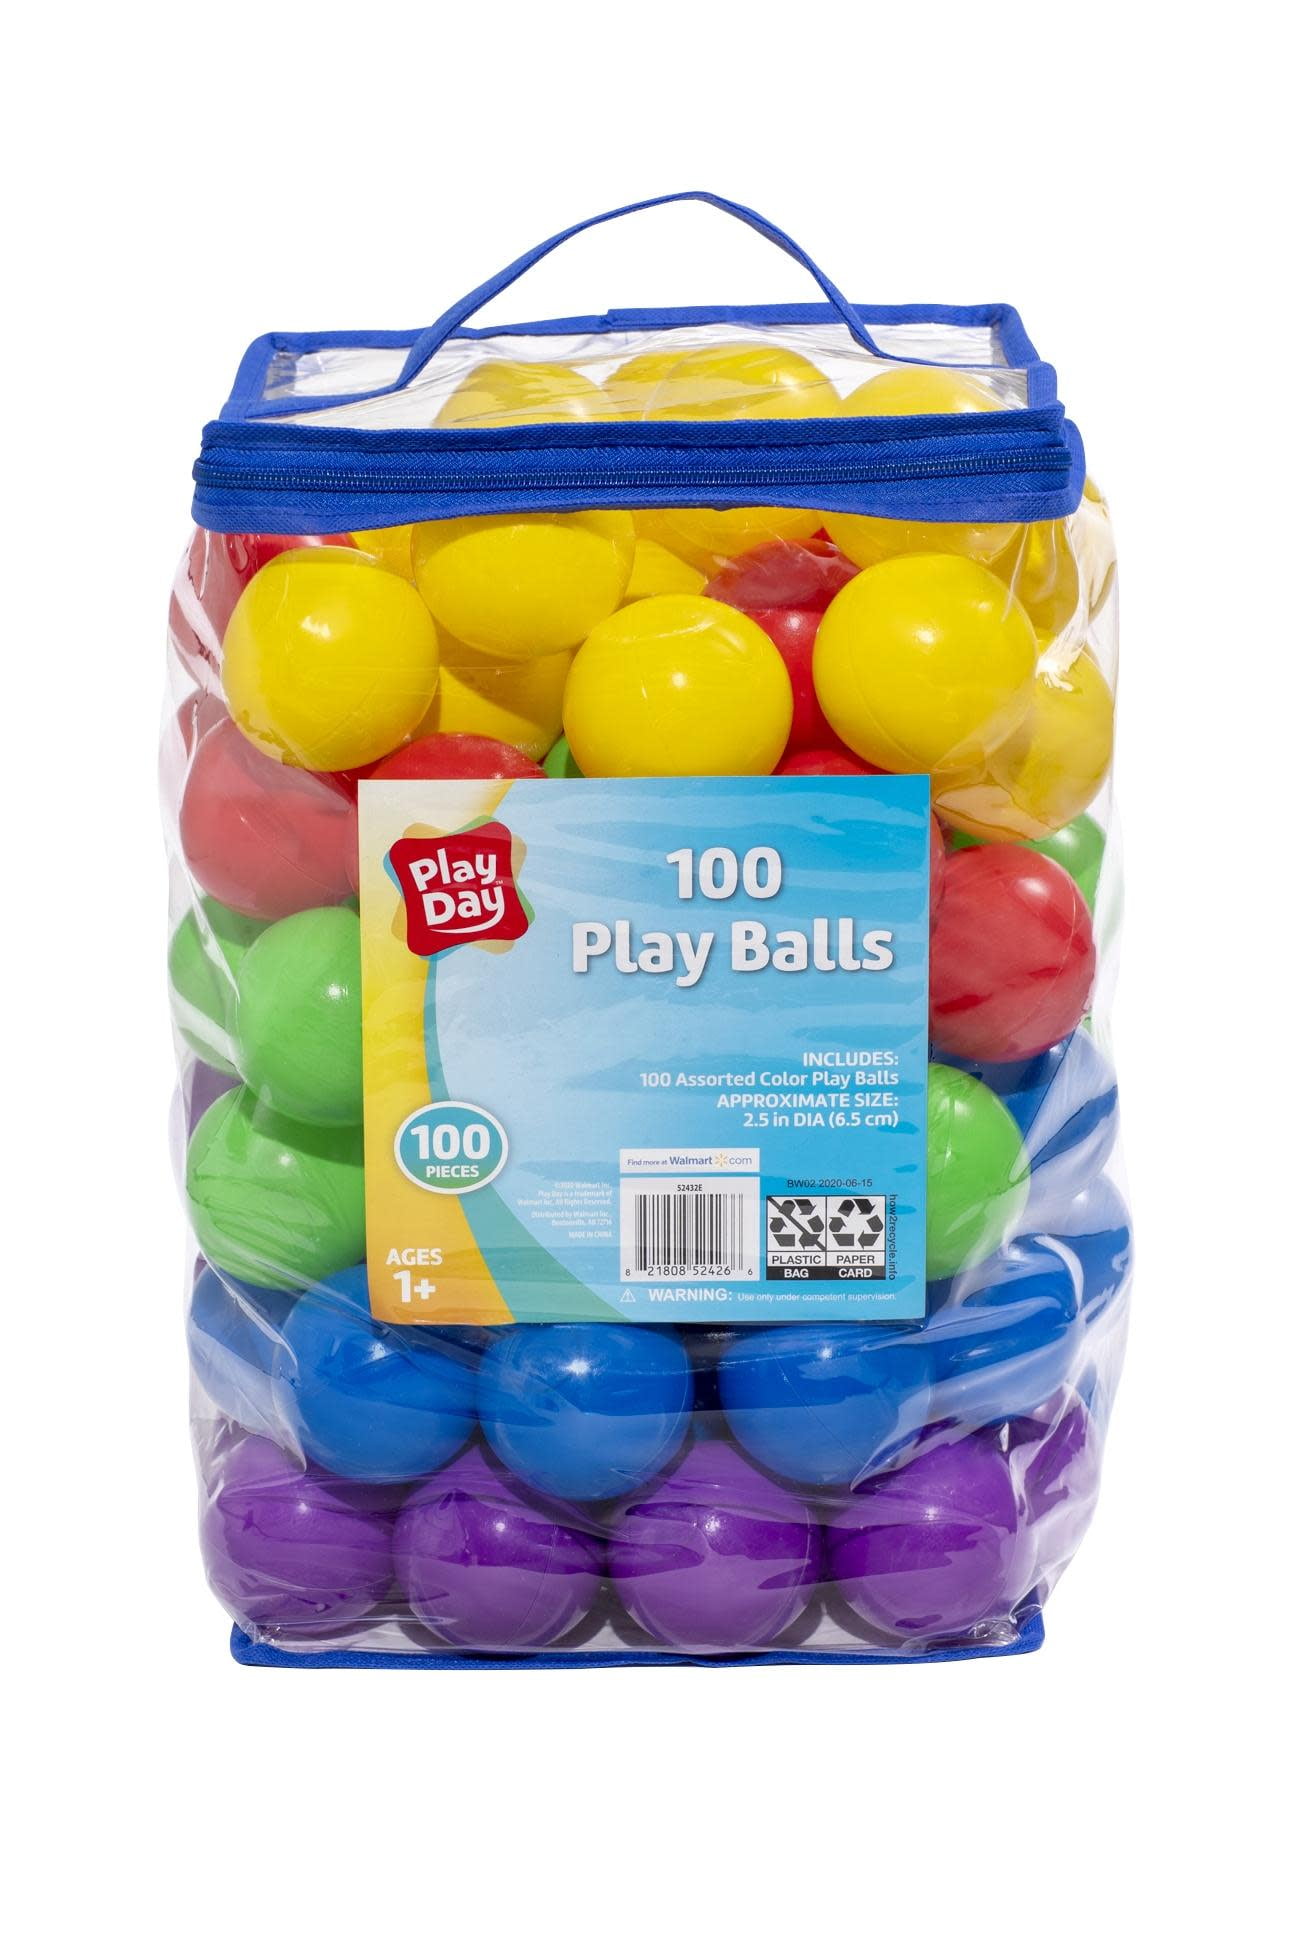 Kids Children Plastic Balls for Ball Pits Bouncy Castle 500 balls play 